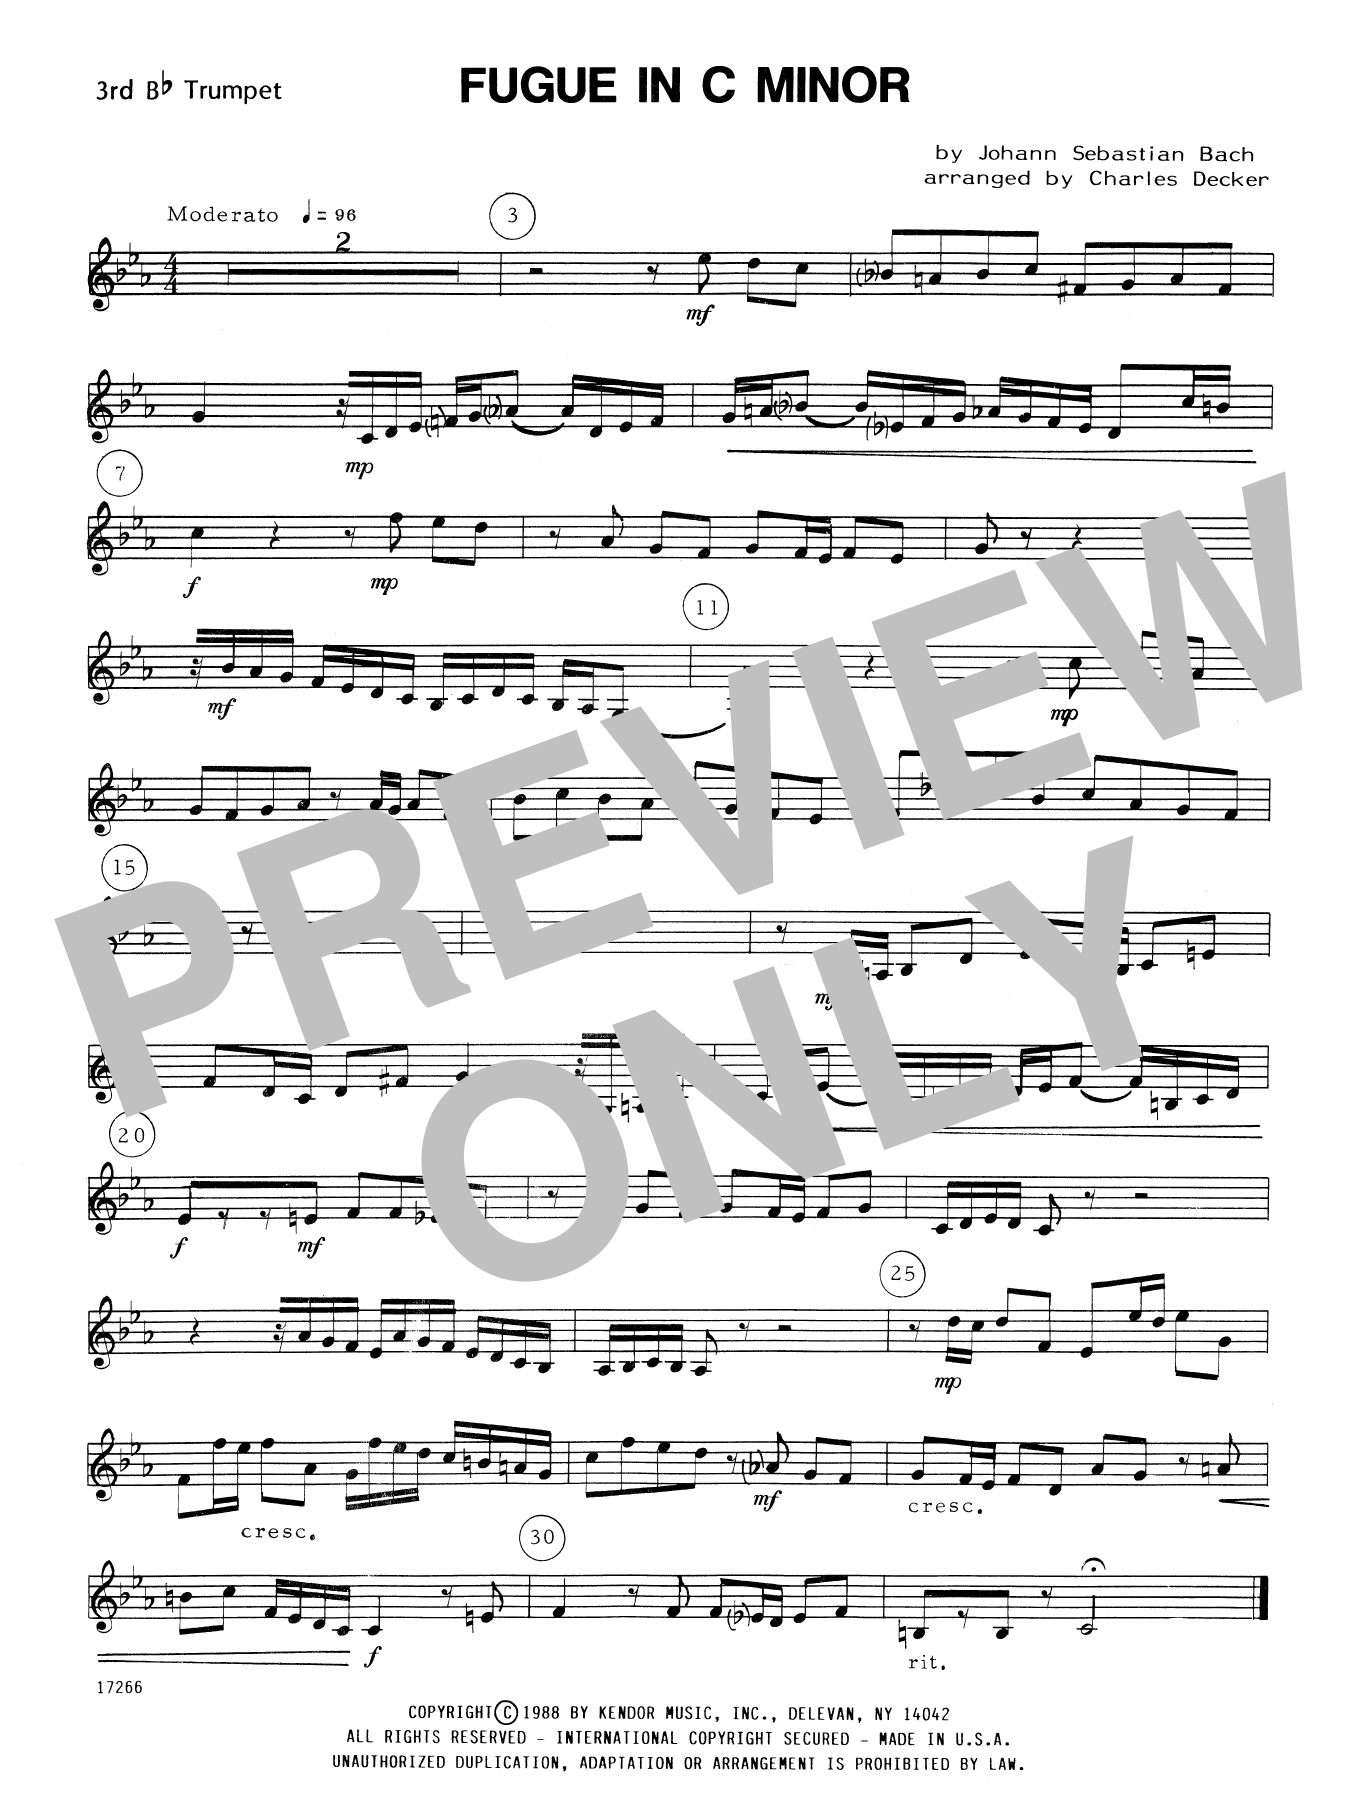 Download Charles Decker Fugue In C Minor - 3rd Bb Trumpet Sheet Music